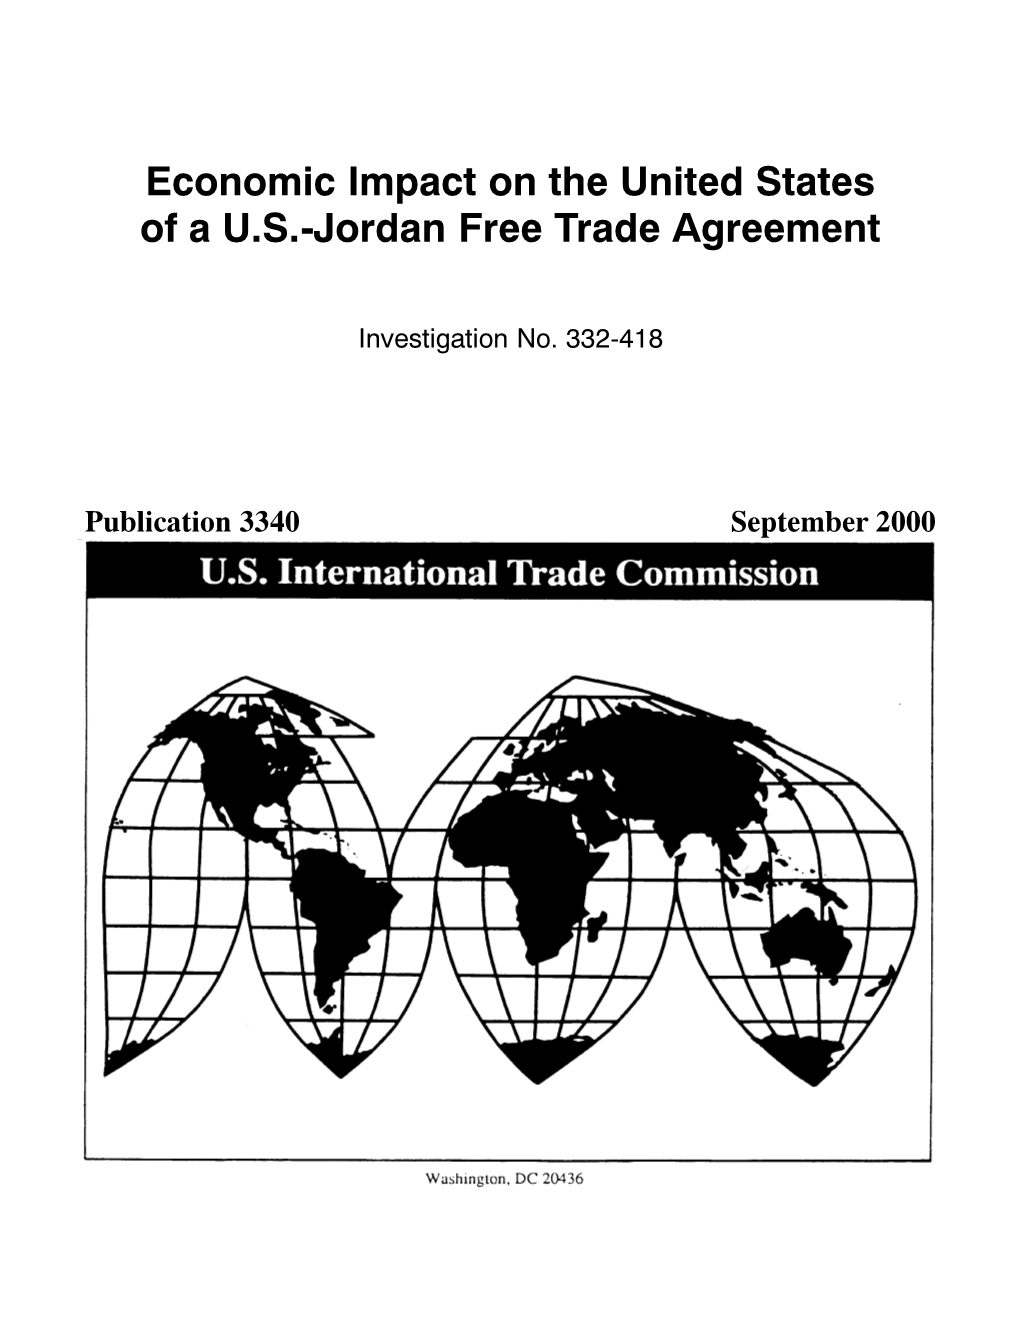 Economic Impact on the United States of a U.S.-Jordan Free Trade